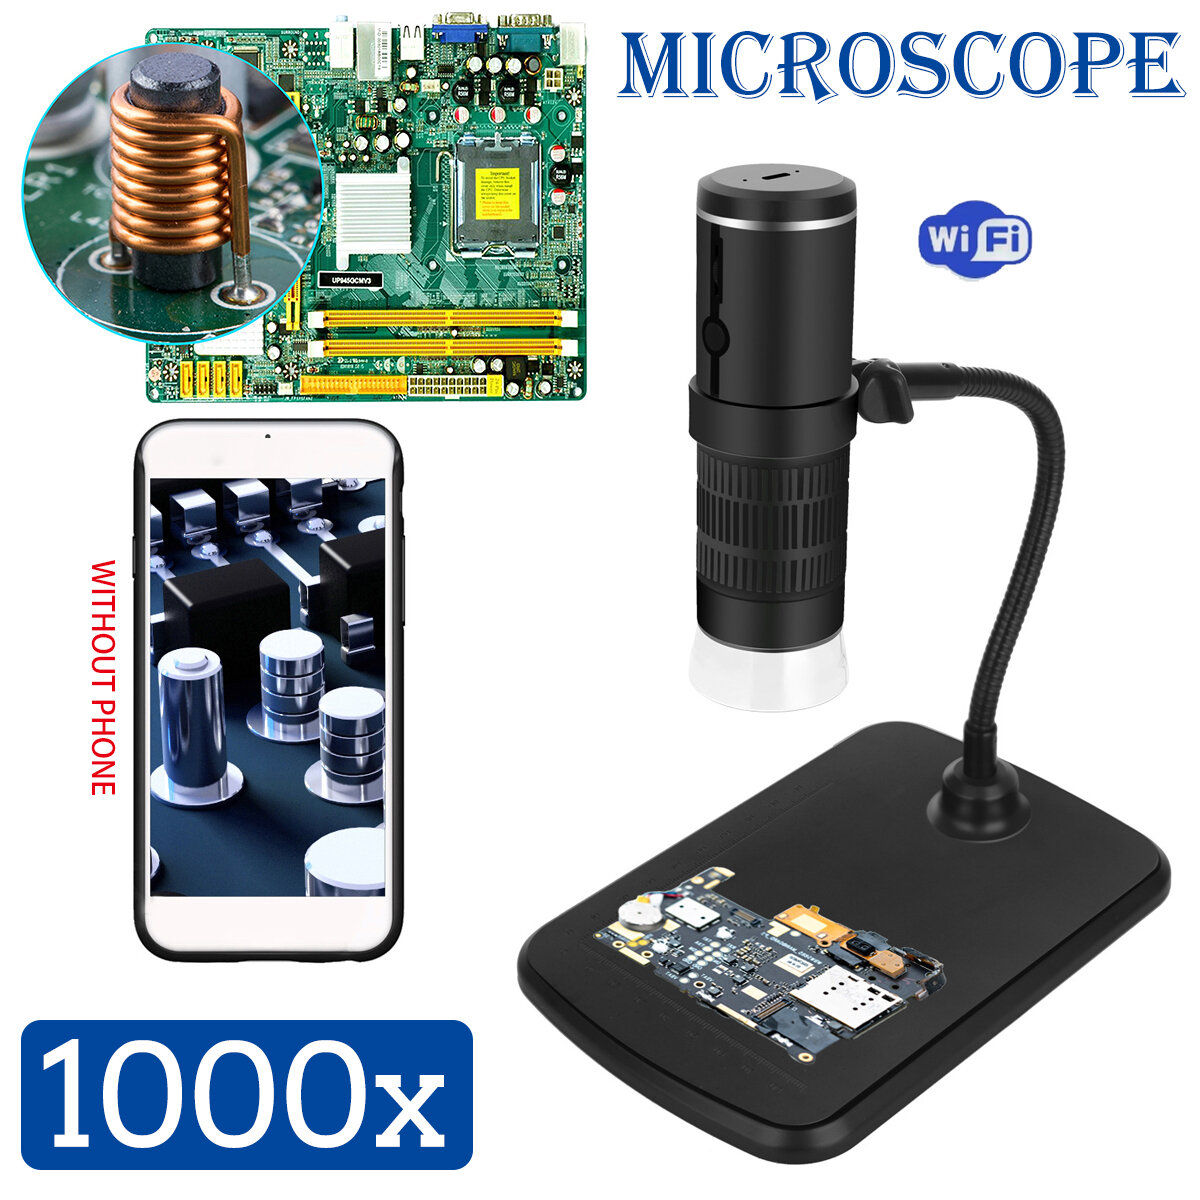 1000X Digital Microscope HD 1080P LED USB WiFi Microscope Mobile Phone Microscope Camera for Smartphone PCB Inspection T